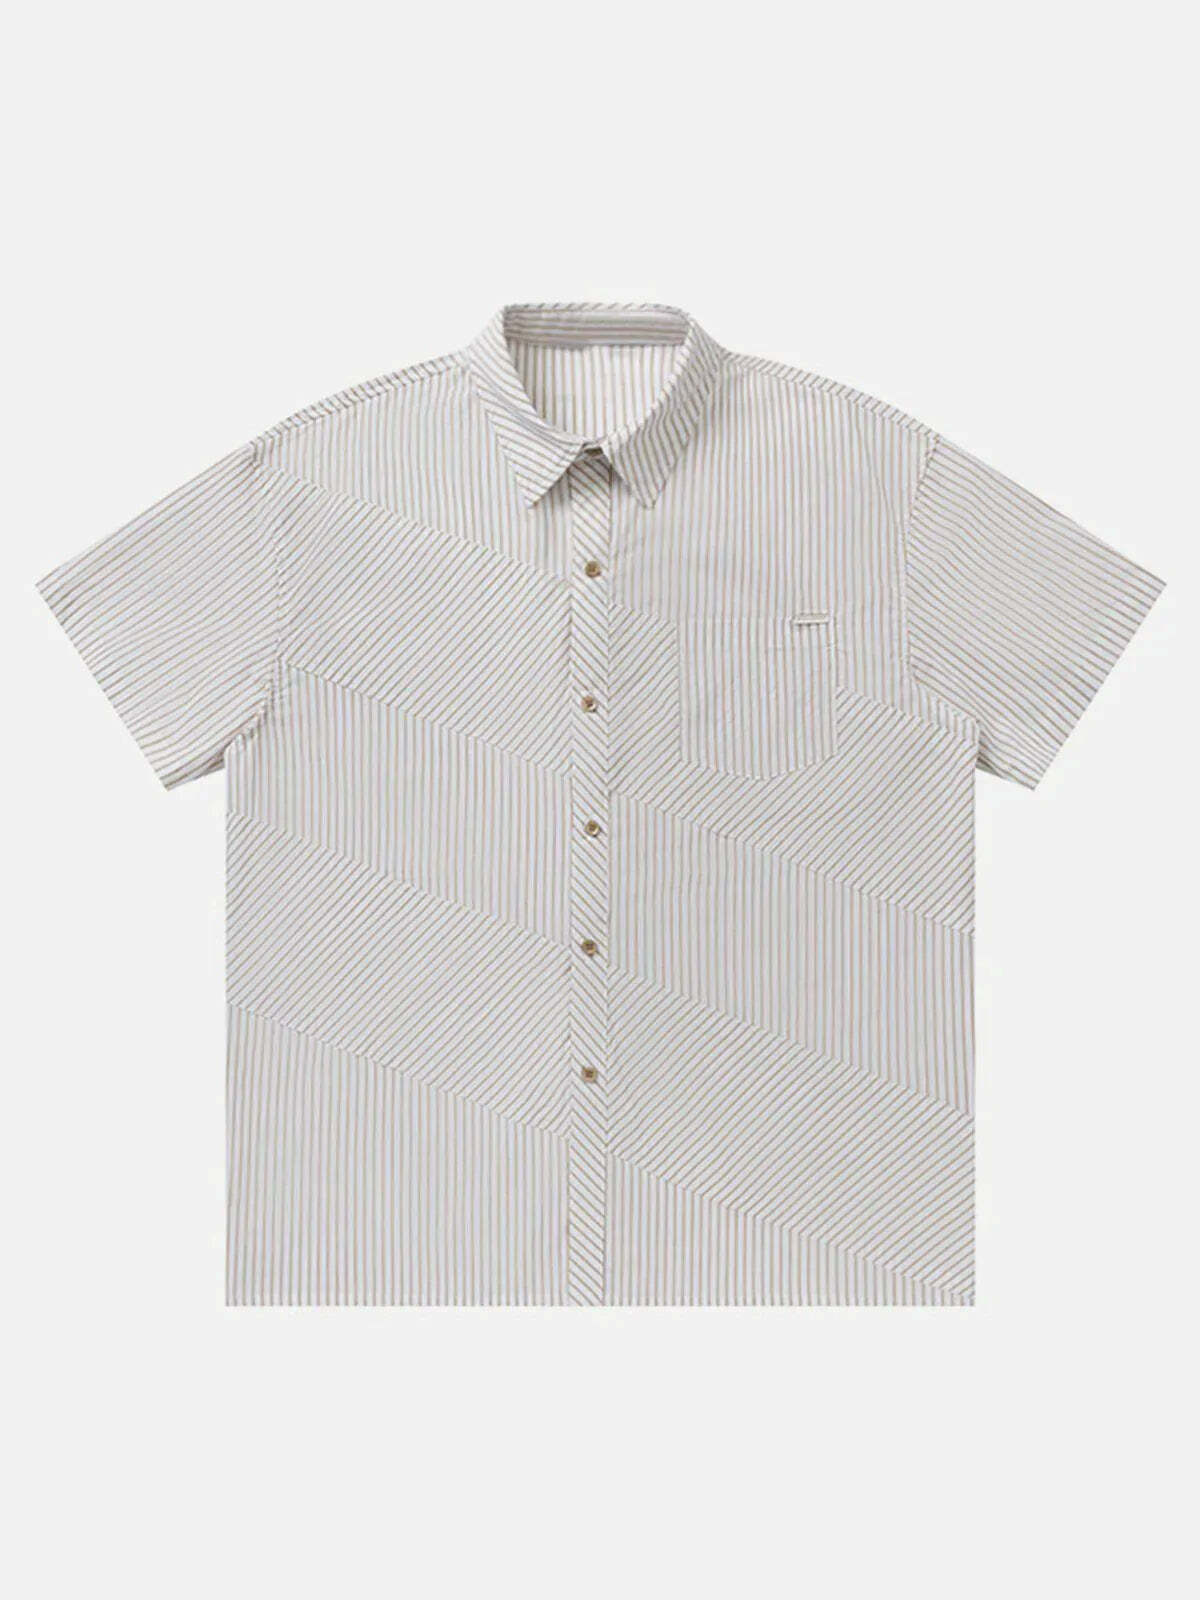 patchwork oblique stripes shirt urban sophistication 1961